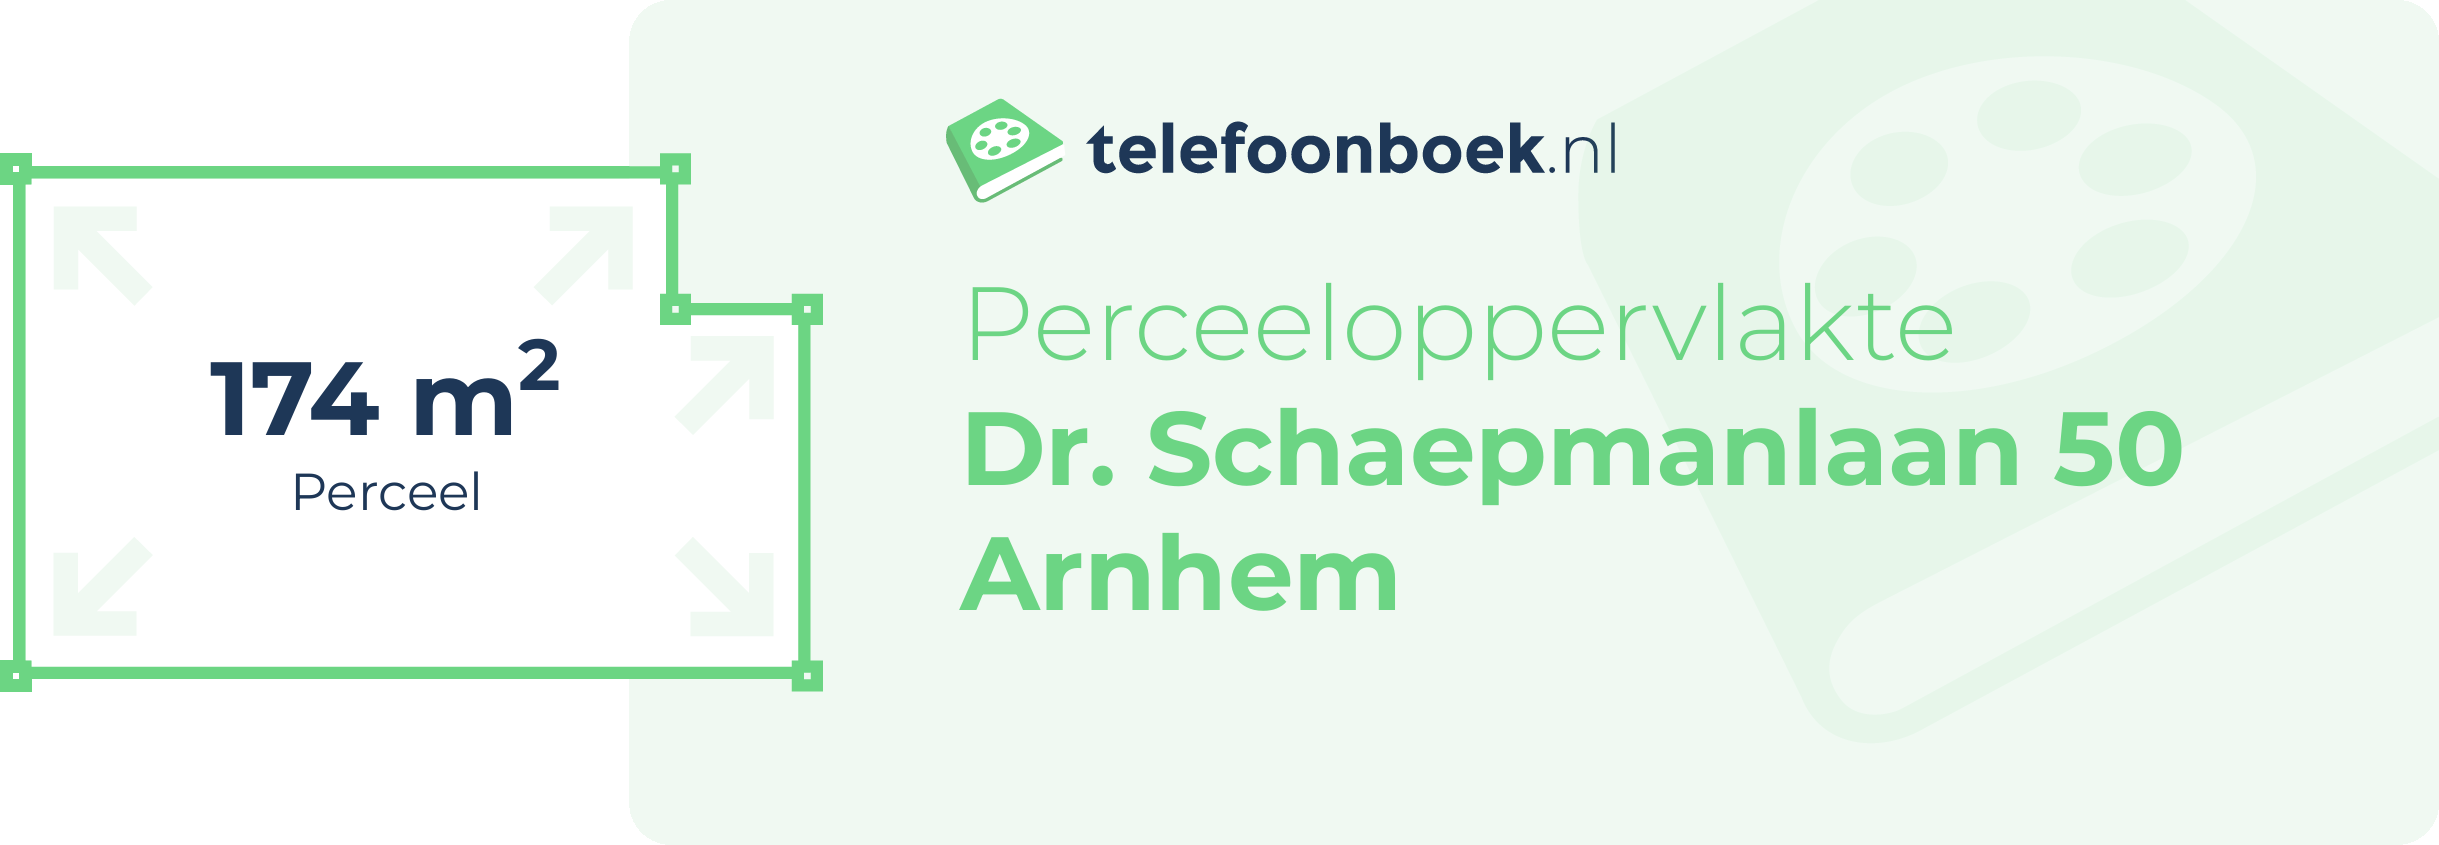 Perceeloppervlakte Dr. Schaepmanlaan 50 Arnhem